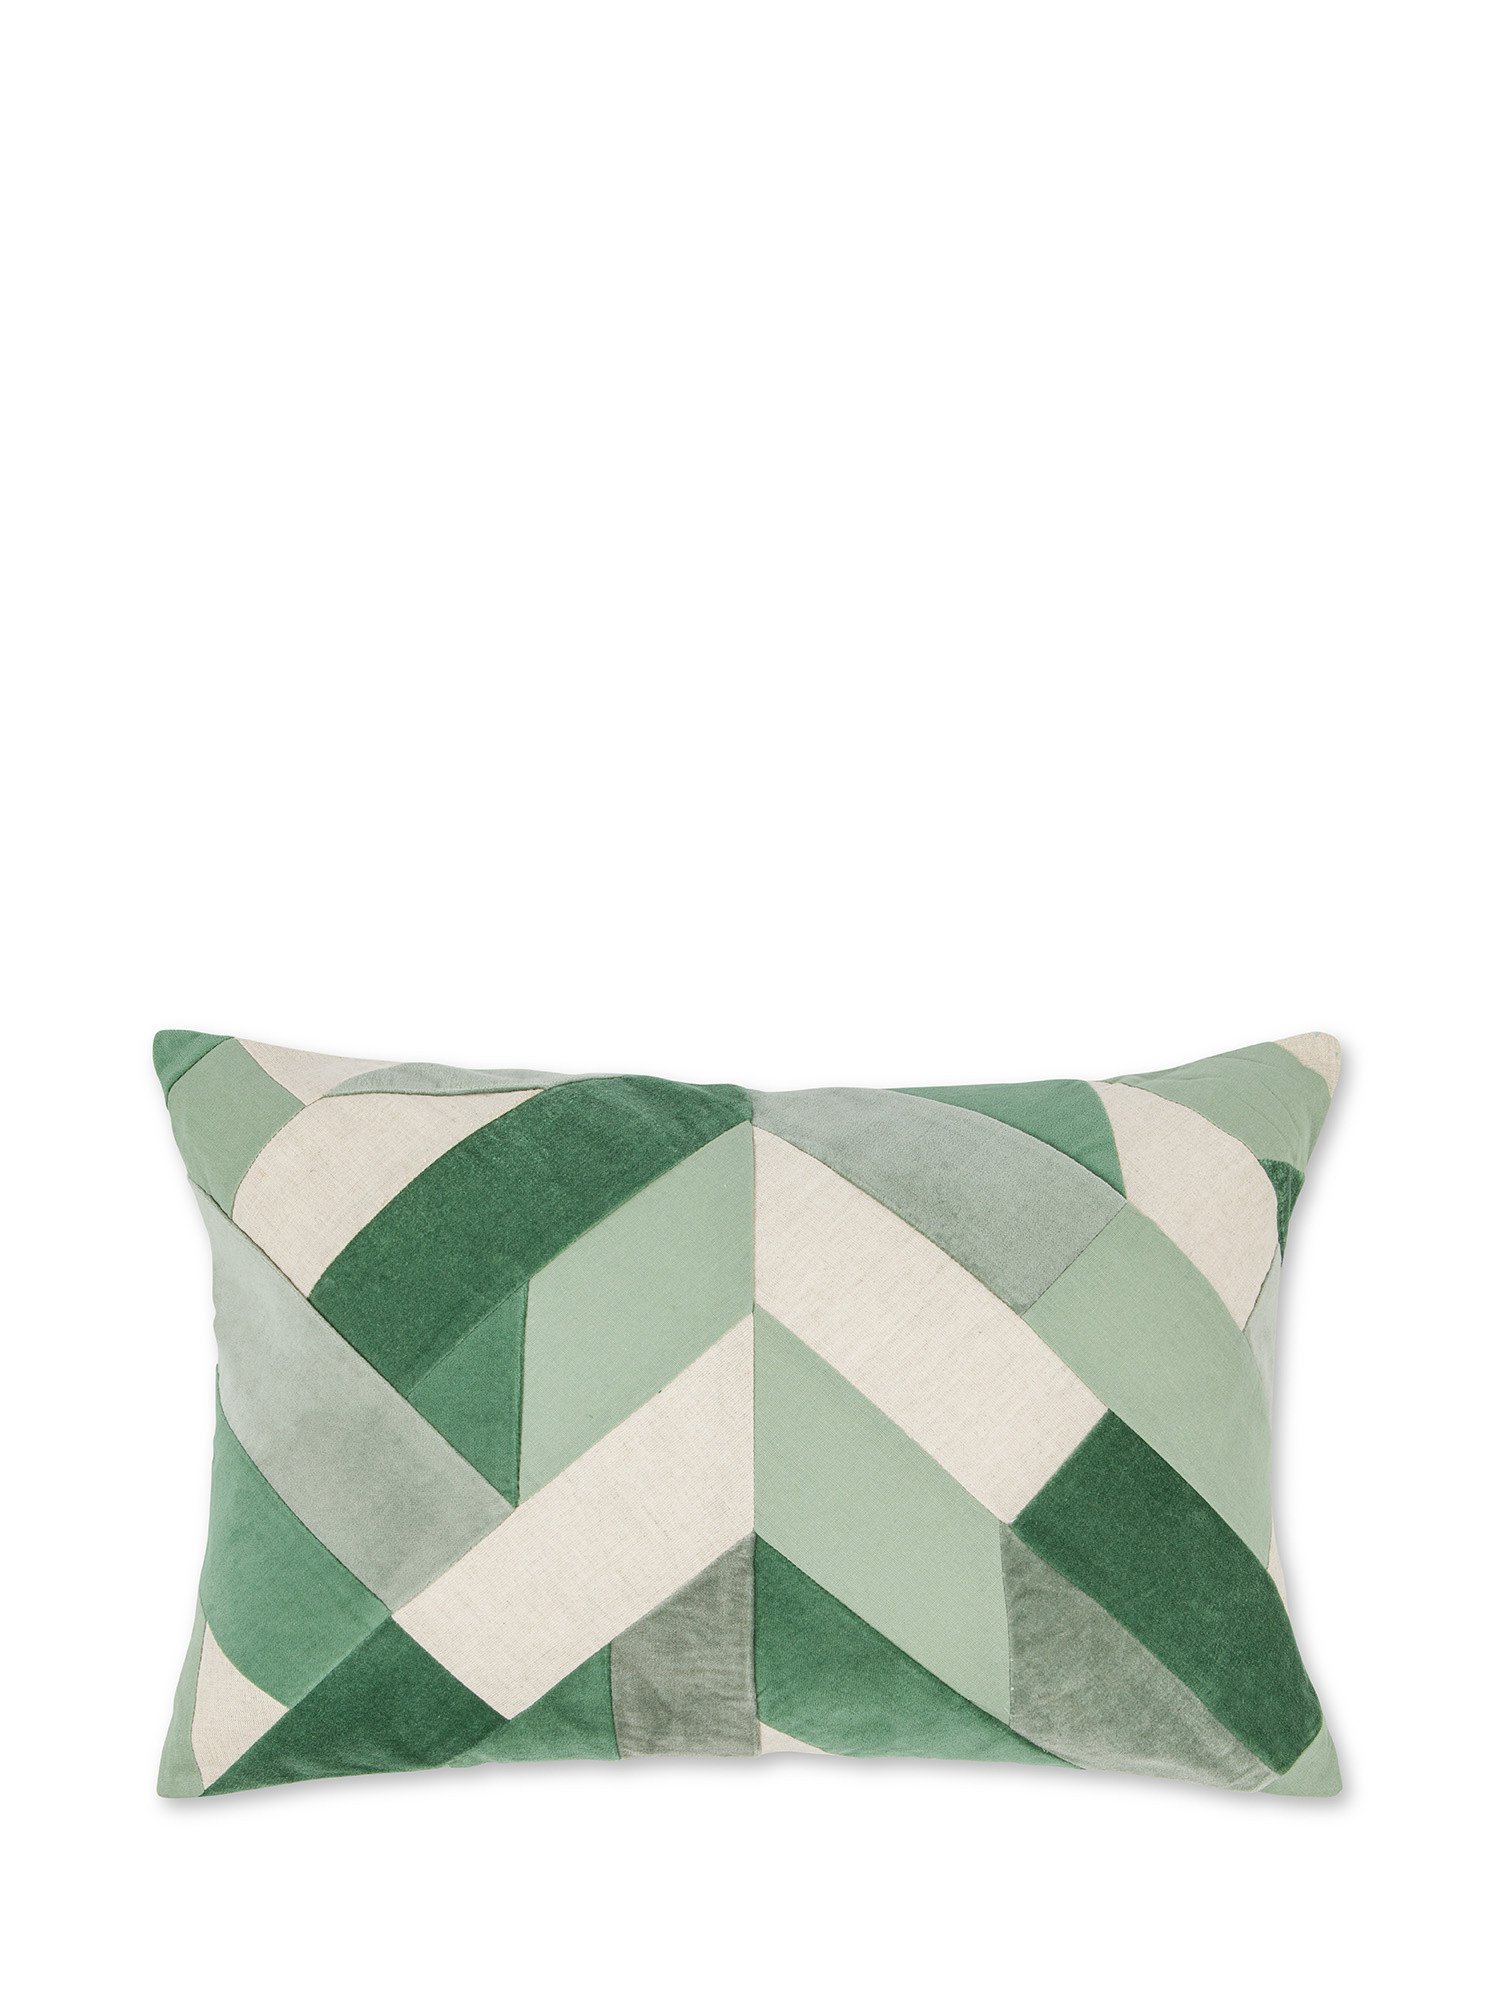 Подушка в стиле пэчворк из микса холста и бархата с геометрическим узором 35х50см Coincasa, зеленый подушка kupu kupu пэчворк